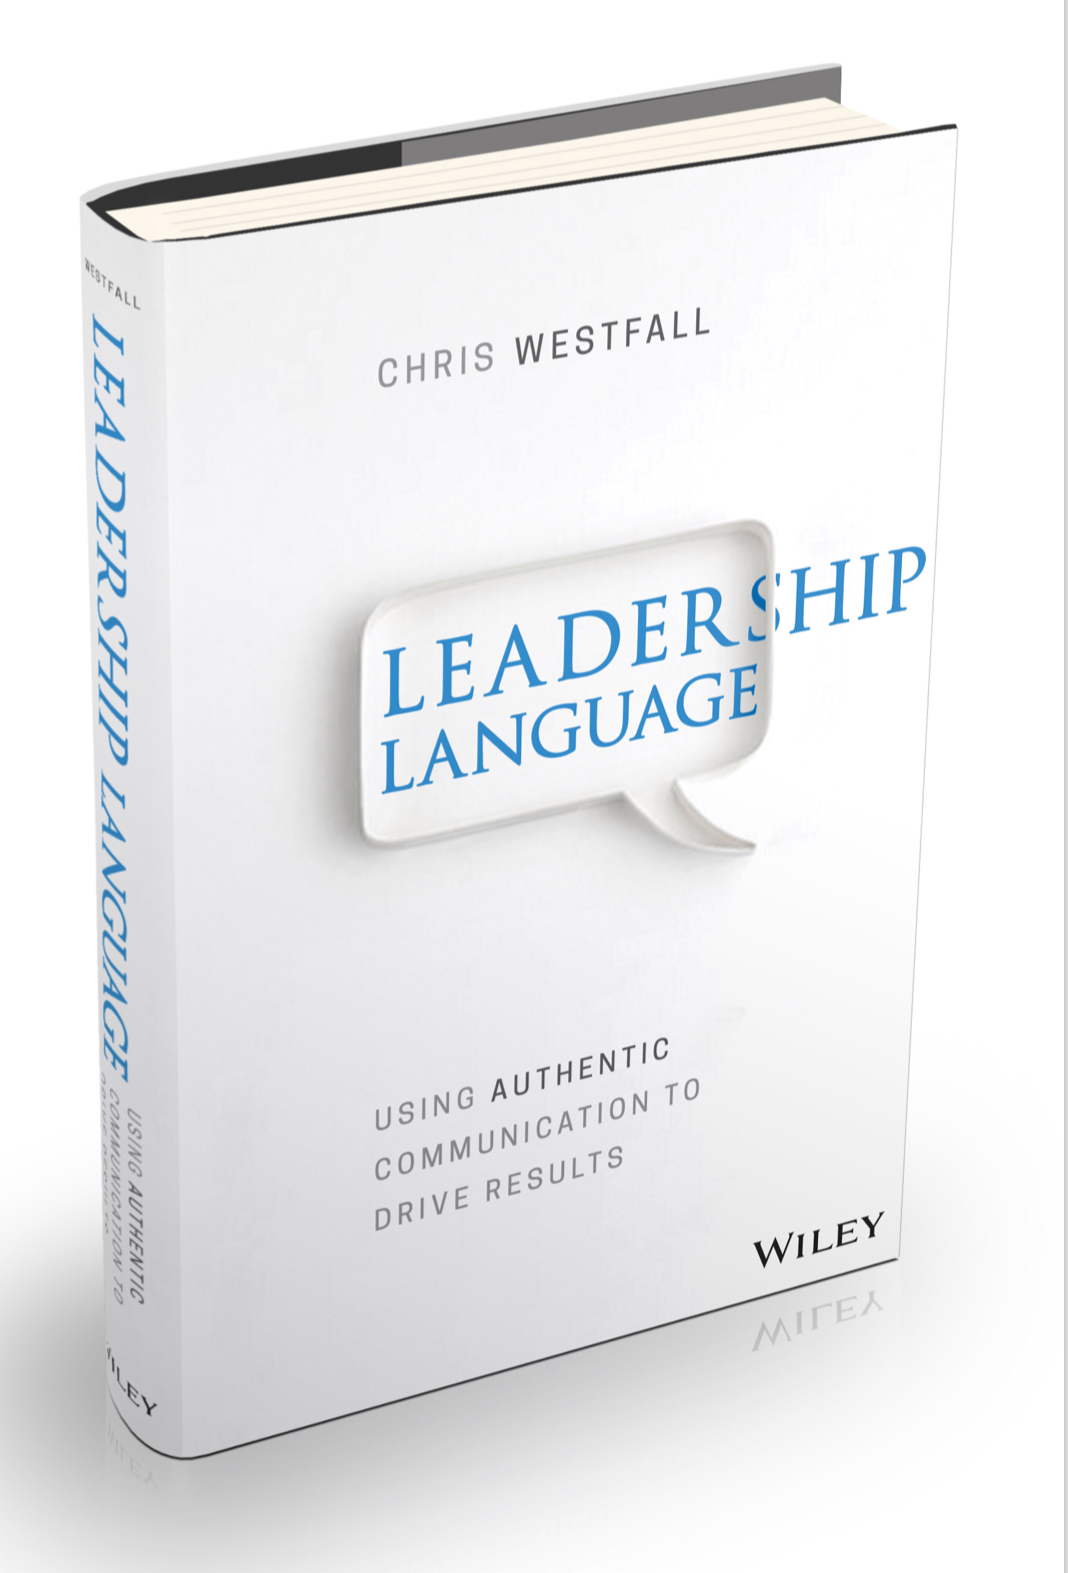 Leadership Language by Chris Westfall